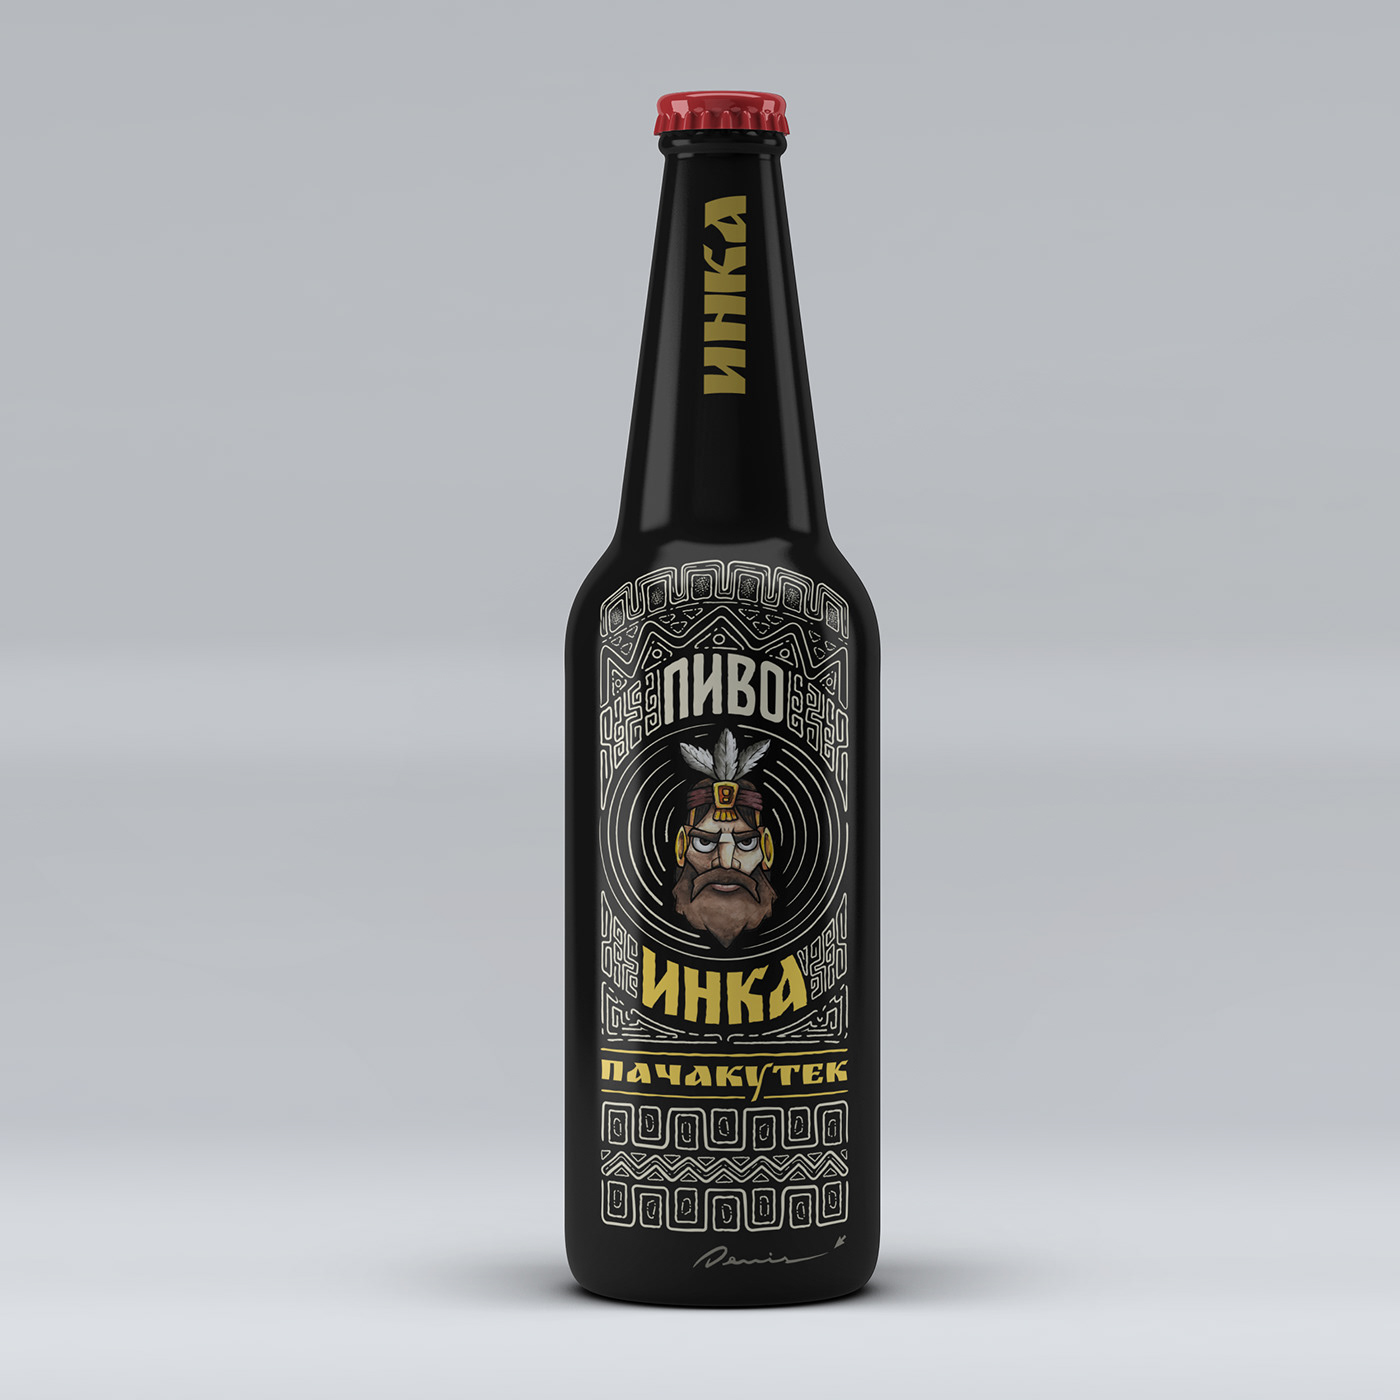 inka inca andino viking beard beer denis denisespinoza Espinoza watercolor